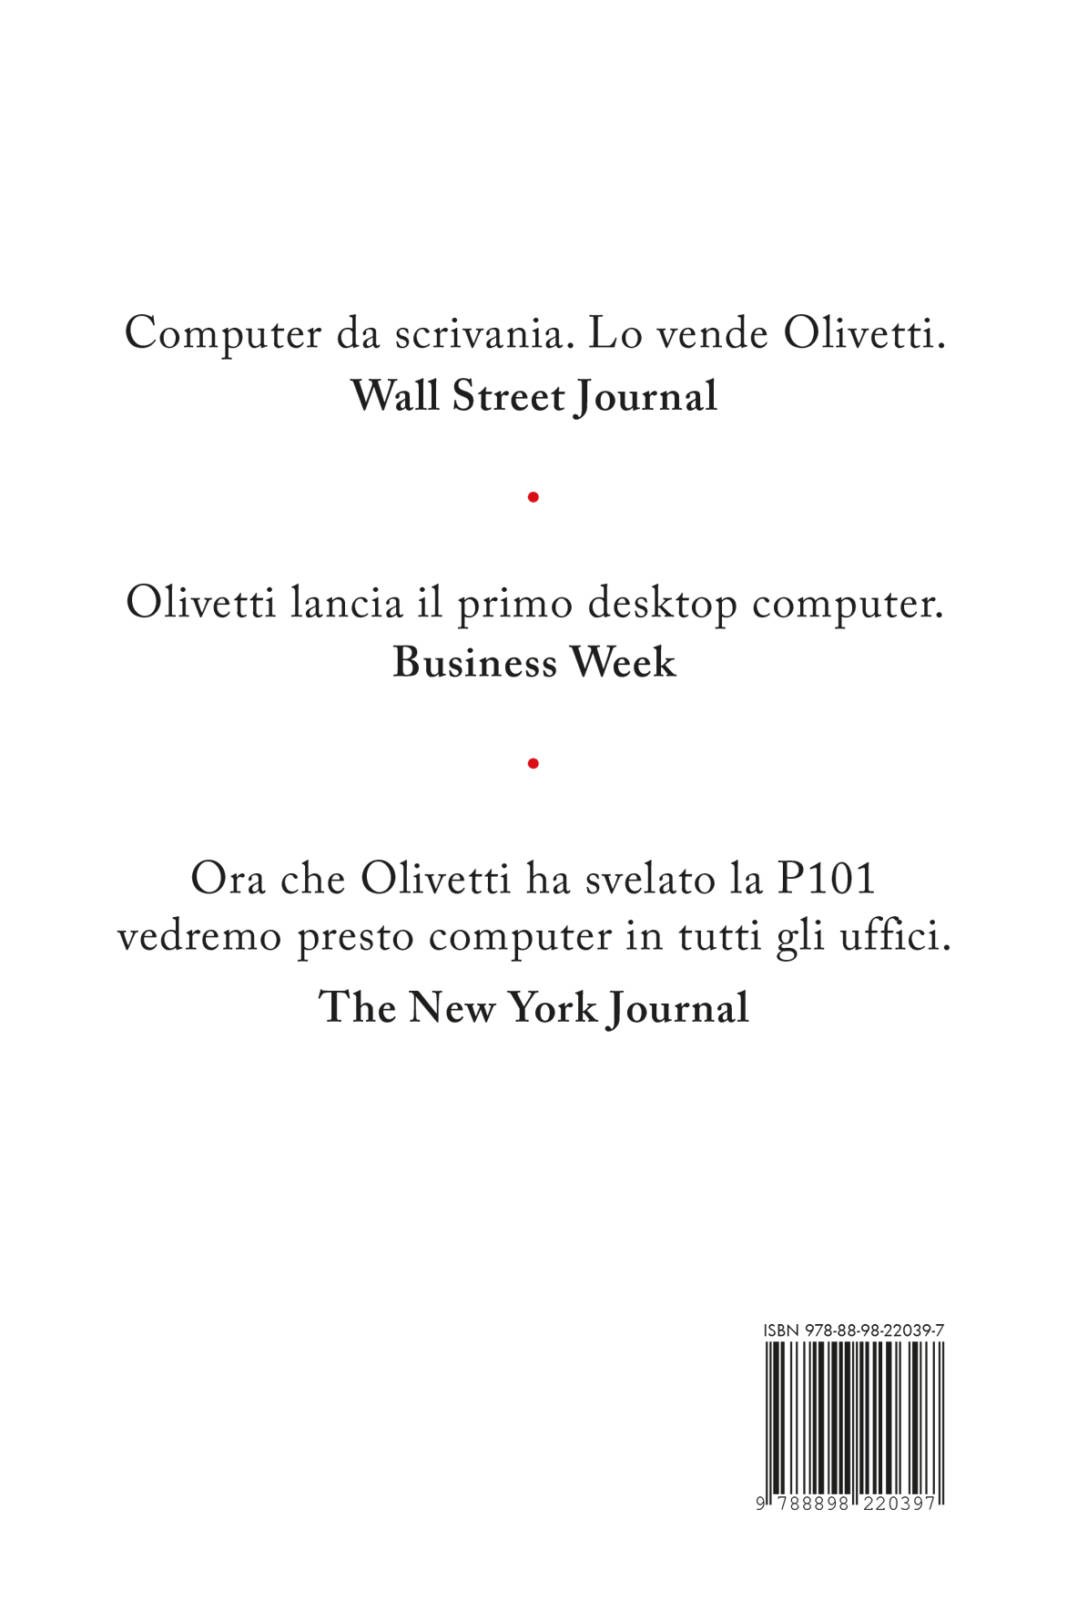 Quarta – P101 – Pier Giorgio Perotto